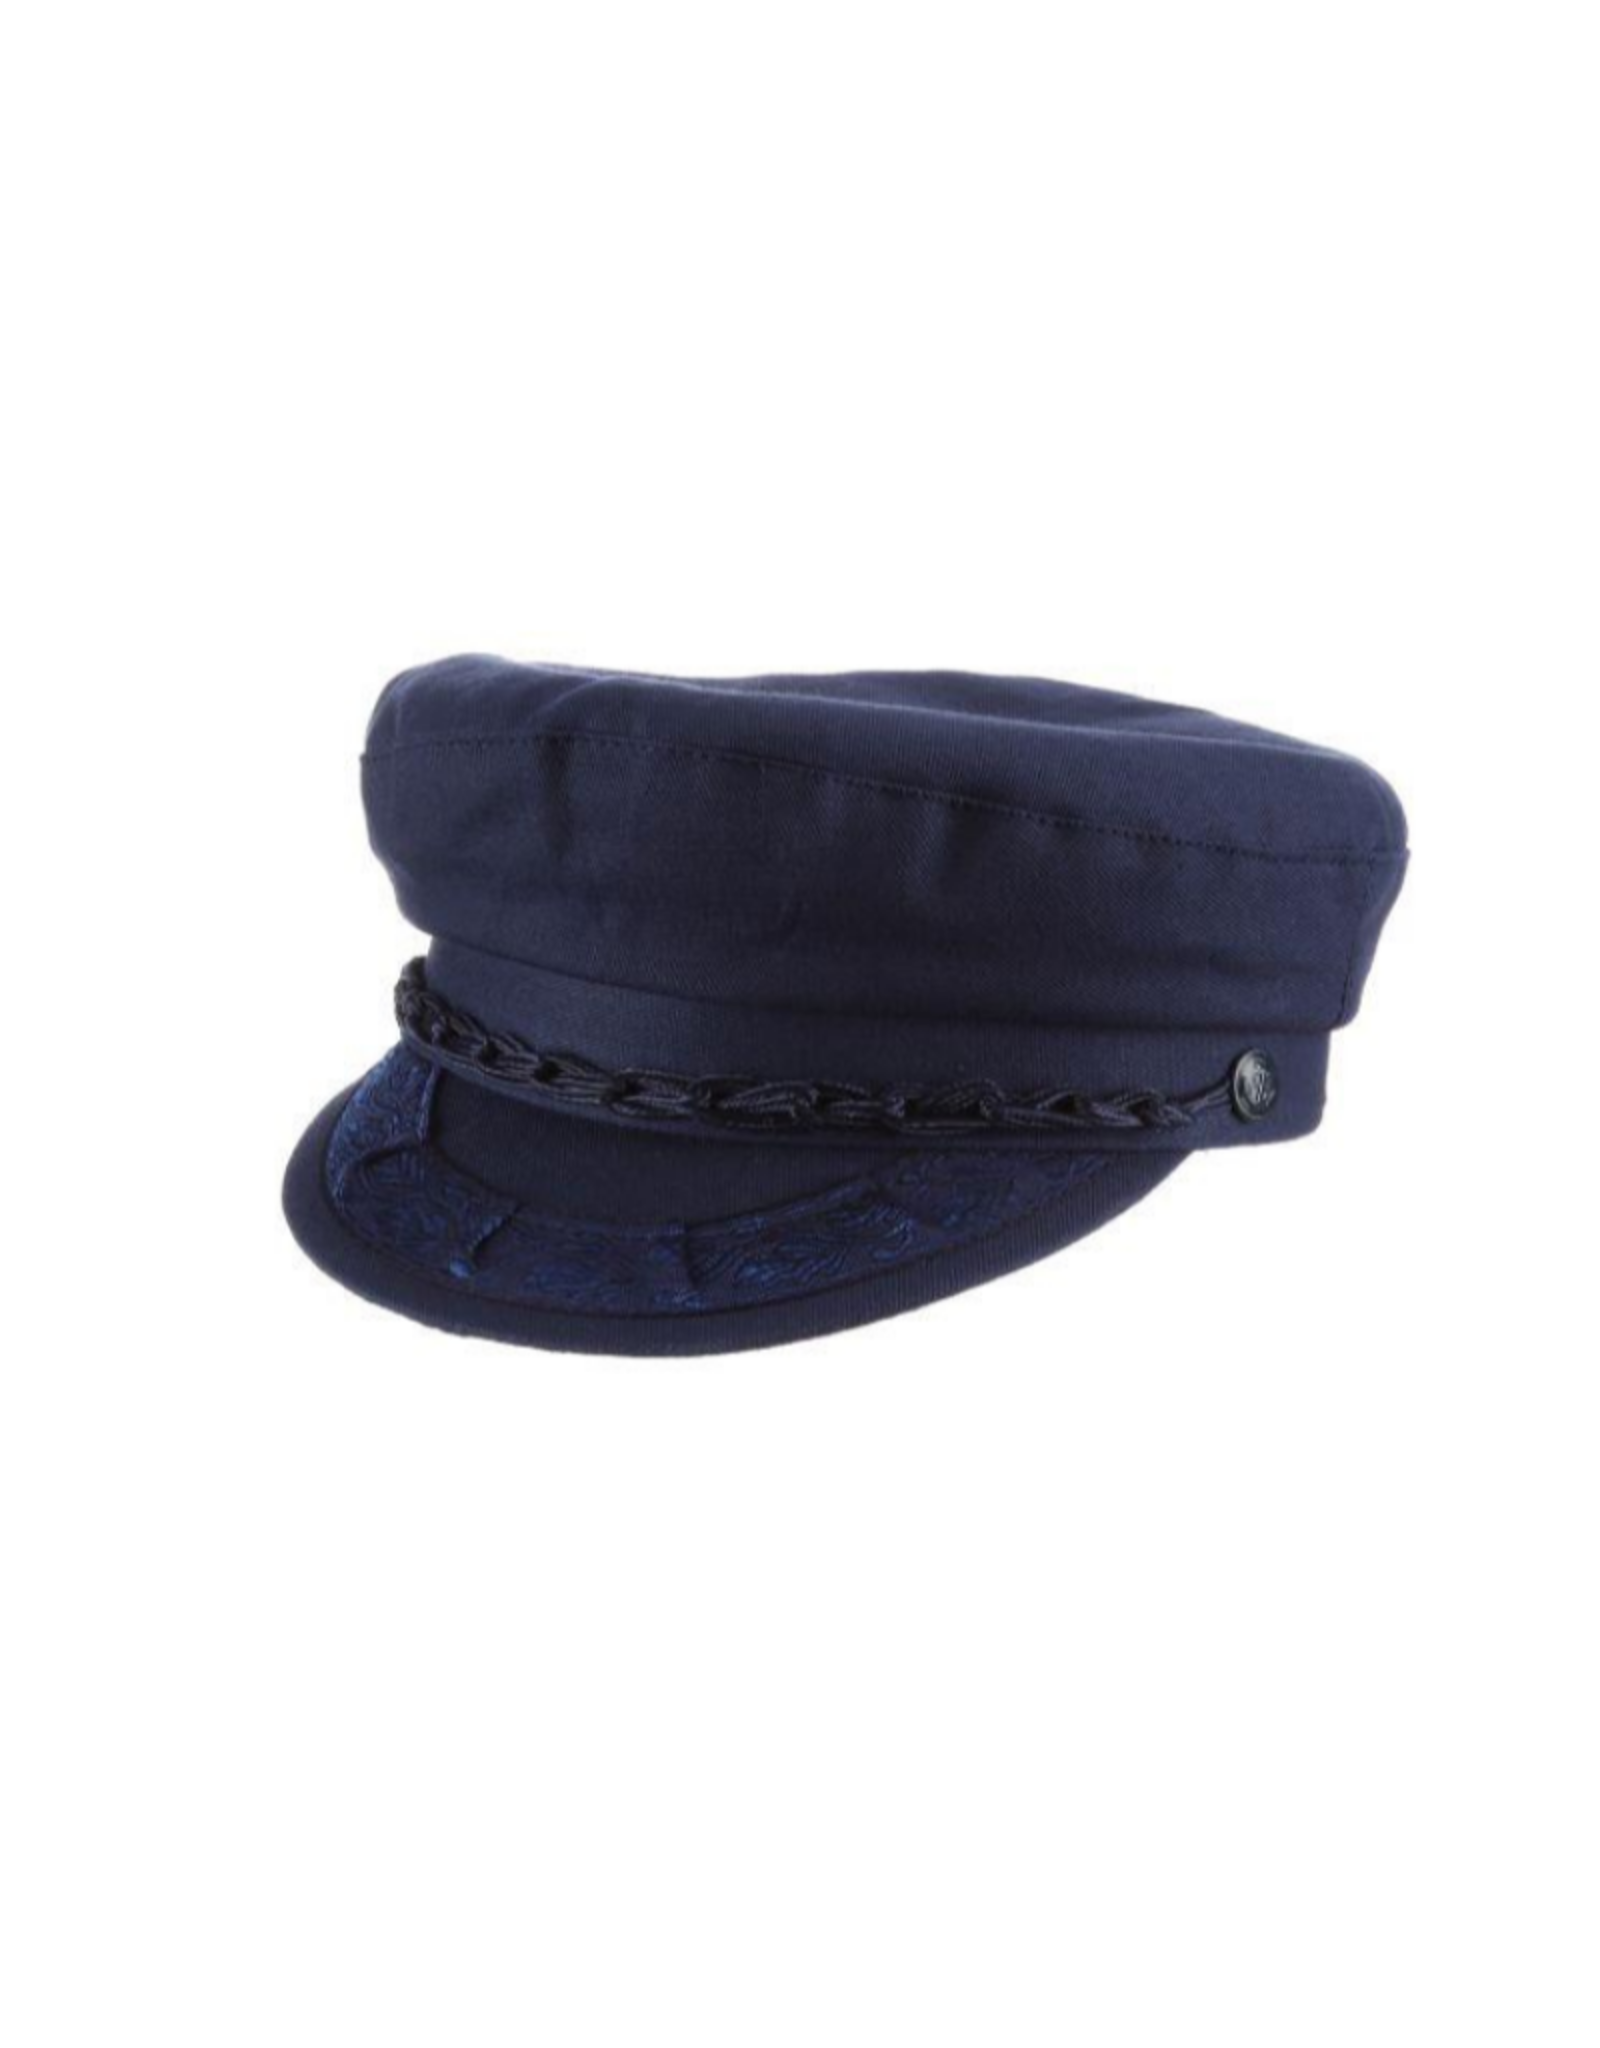 HAT-FISHERMAN CAP "ANAPOS" COTTON